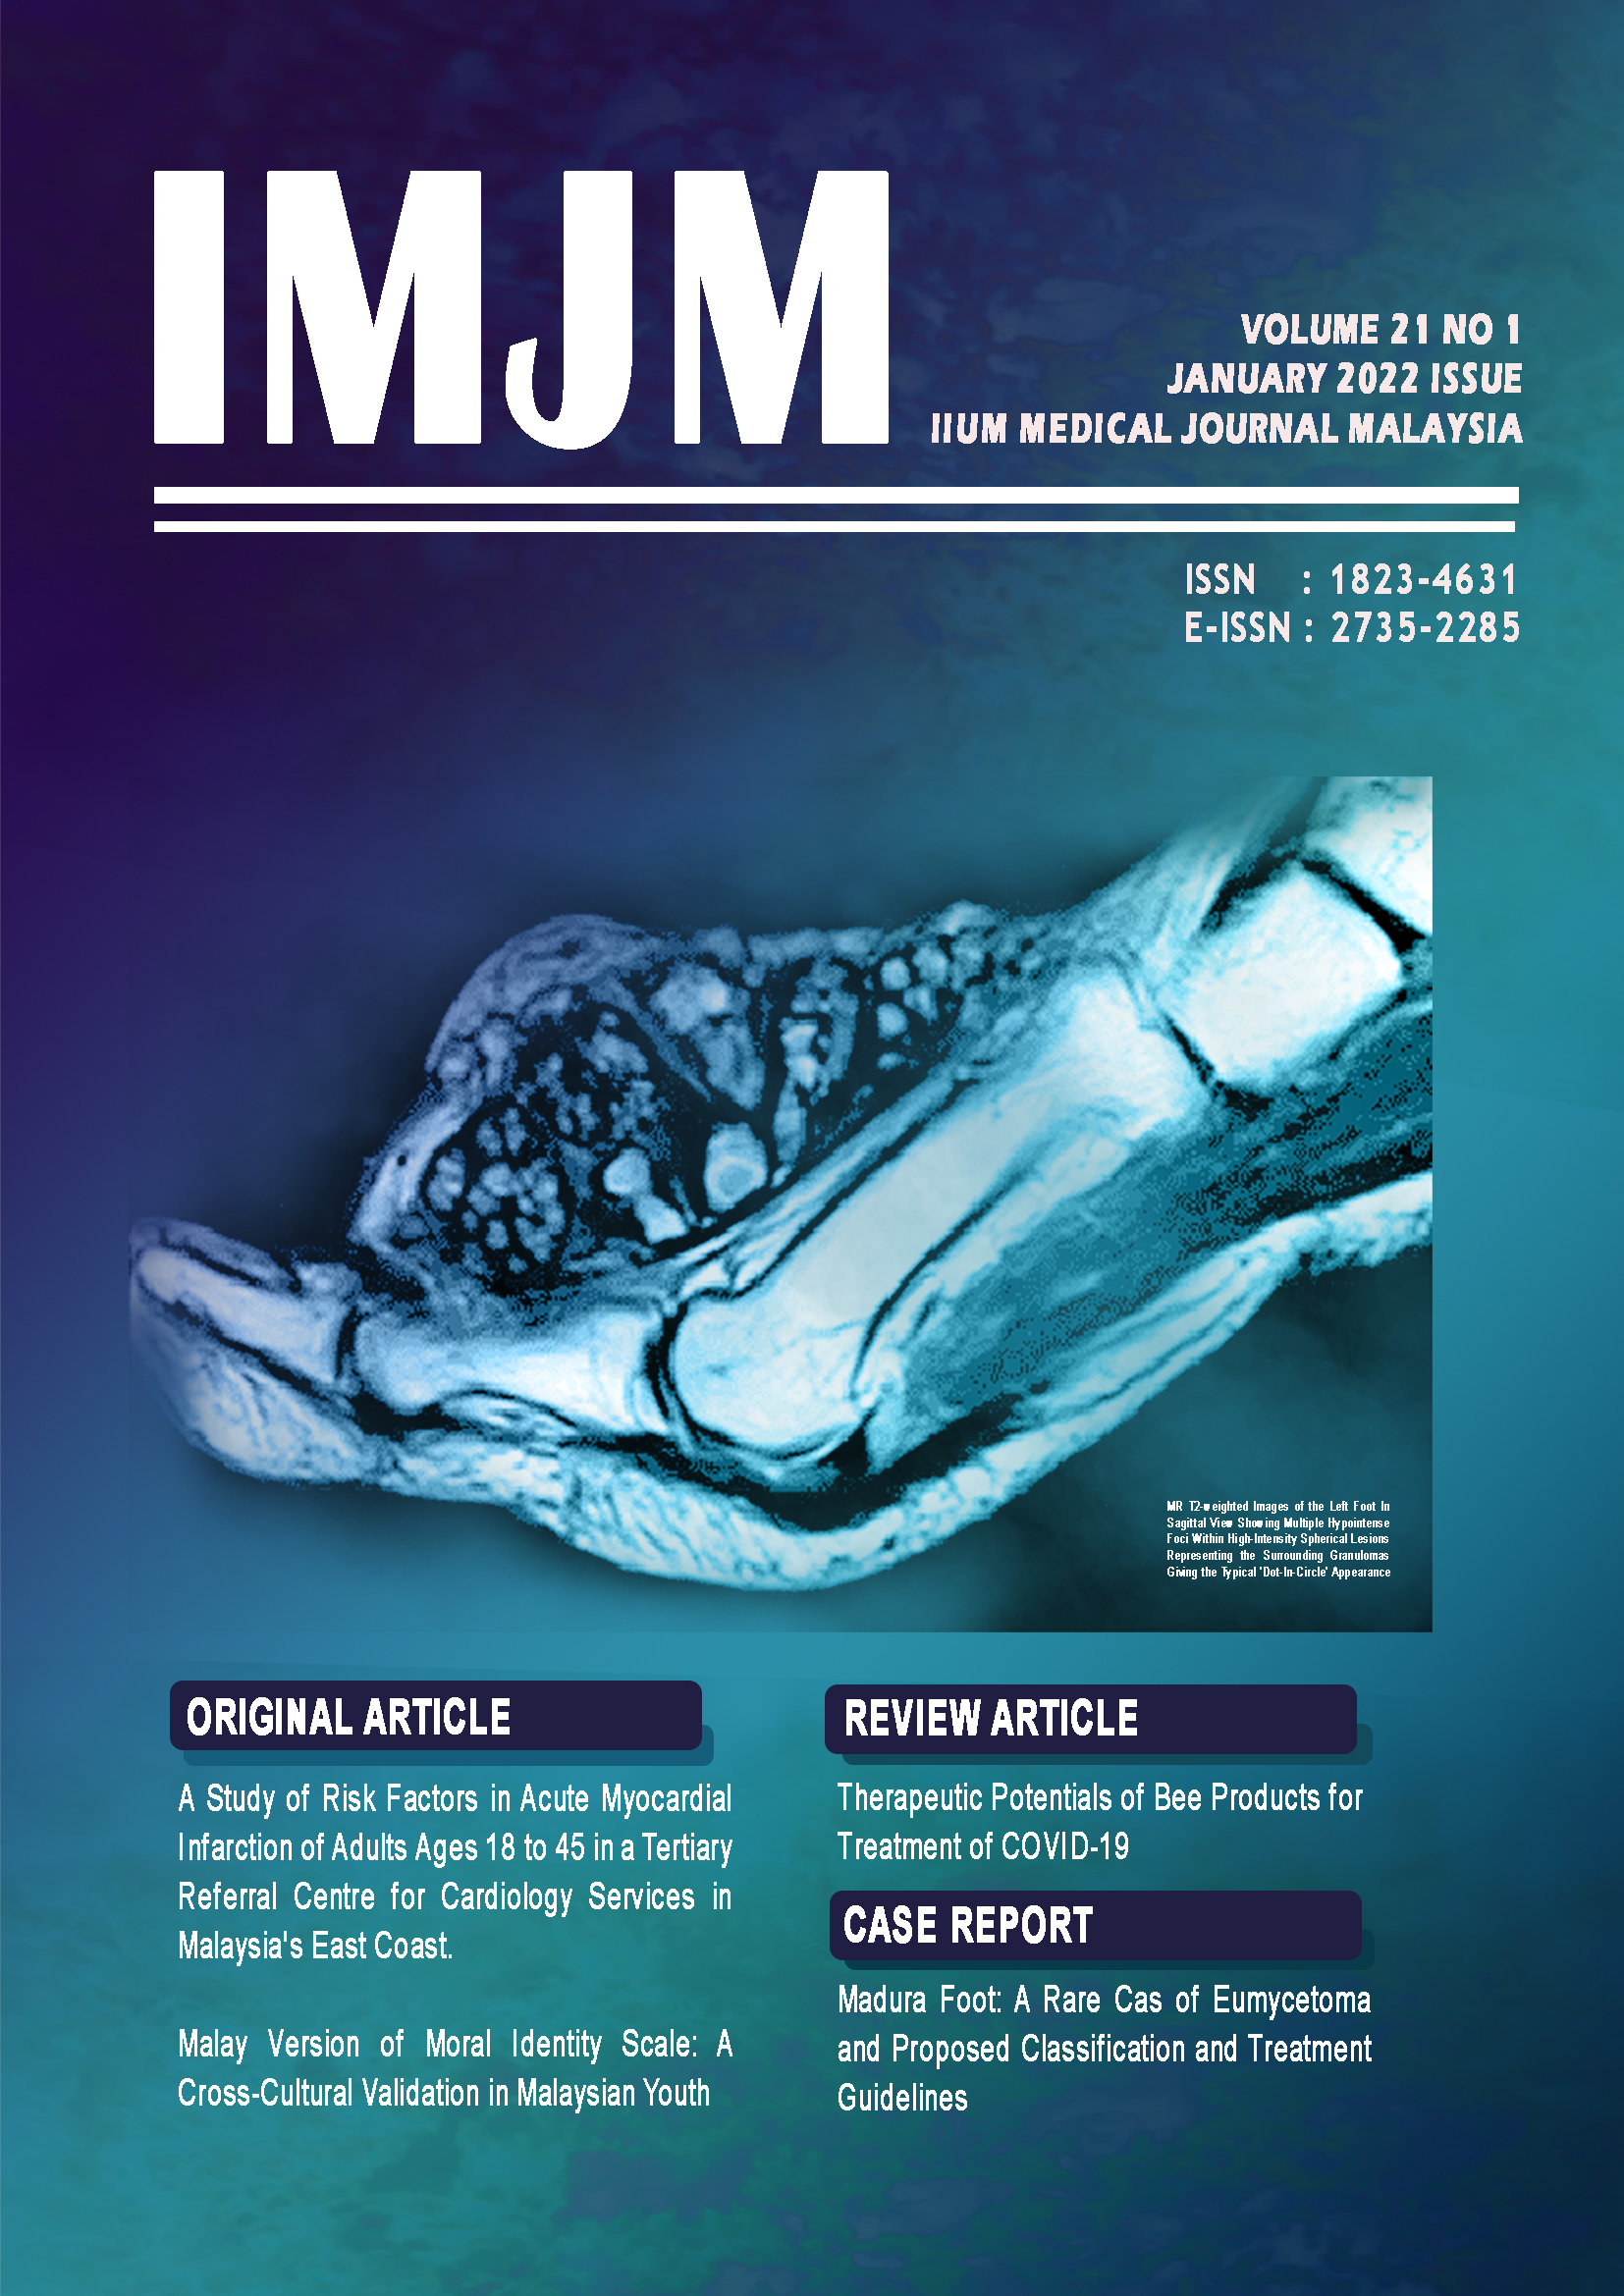 					View Vol. 21 No. 1 (2022): IIUM Medical Journal Malaysia - January 2022
				